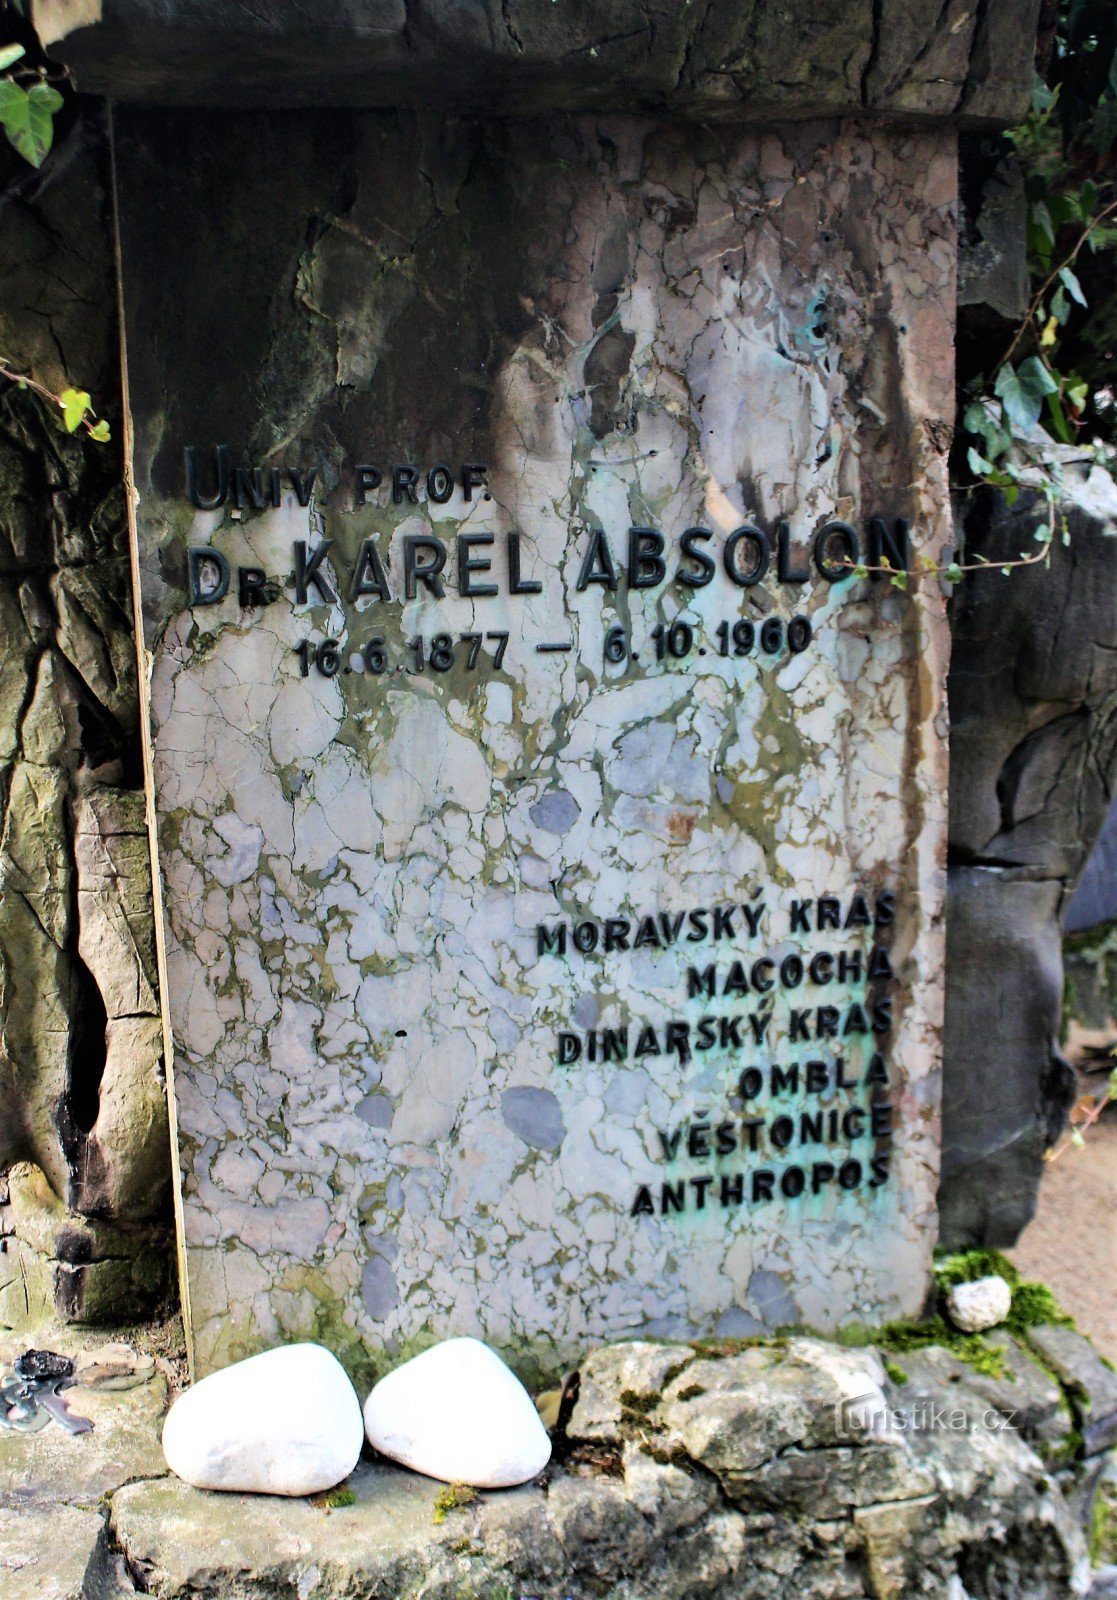 Brno-Ústřední hřbitov - the grave of Karel Absolon